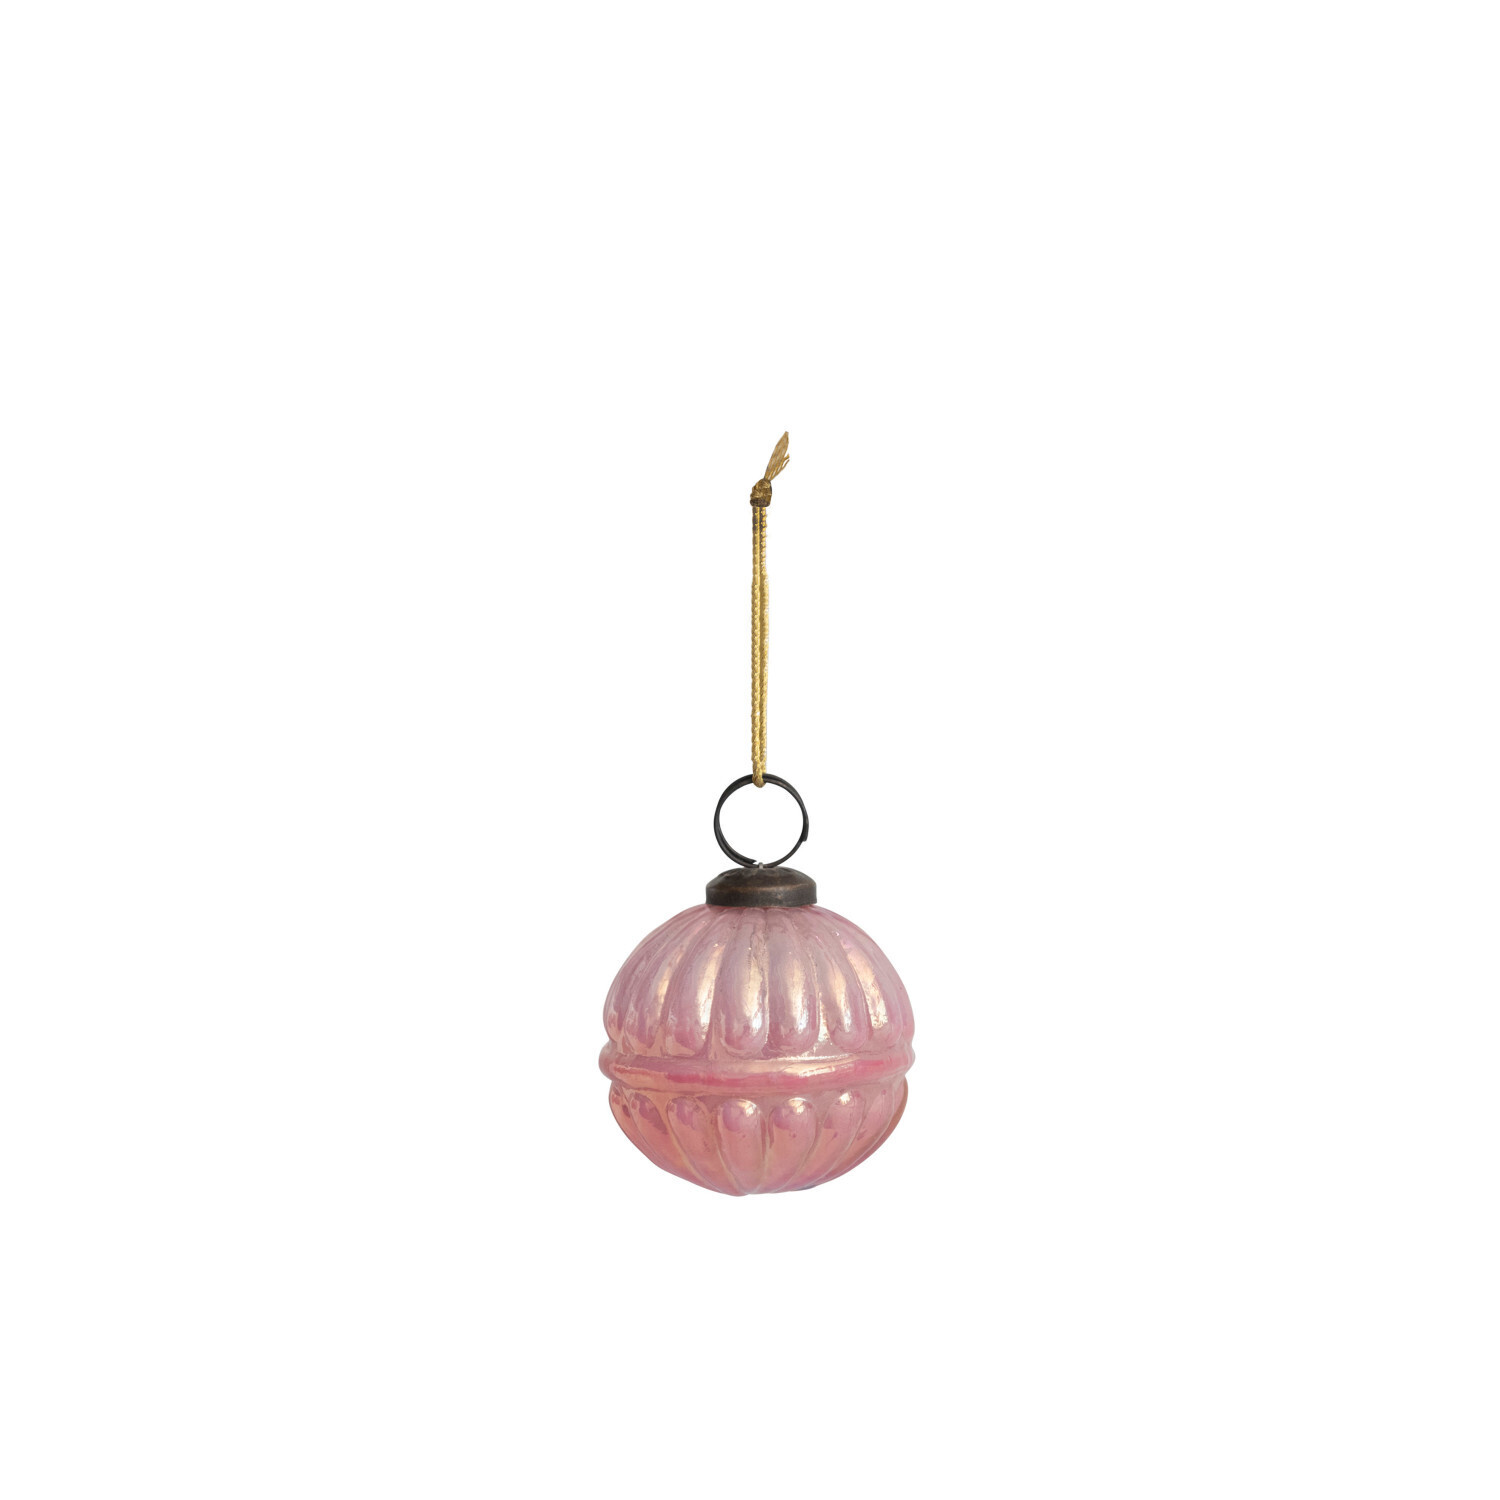 3" Round Embossed Mercury Glass Ball Ornament, Iridescent Pink